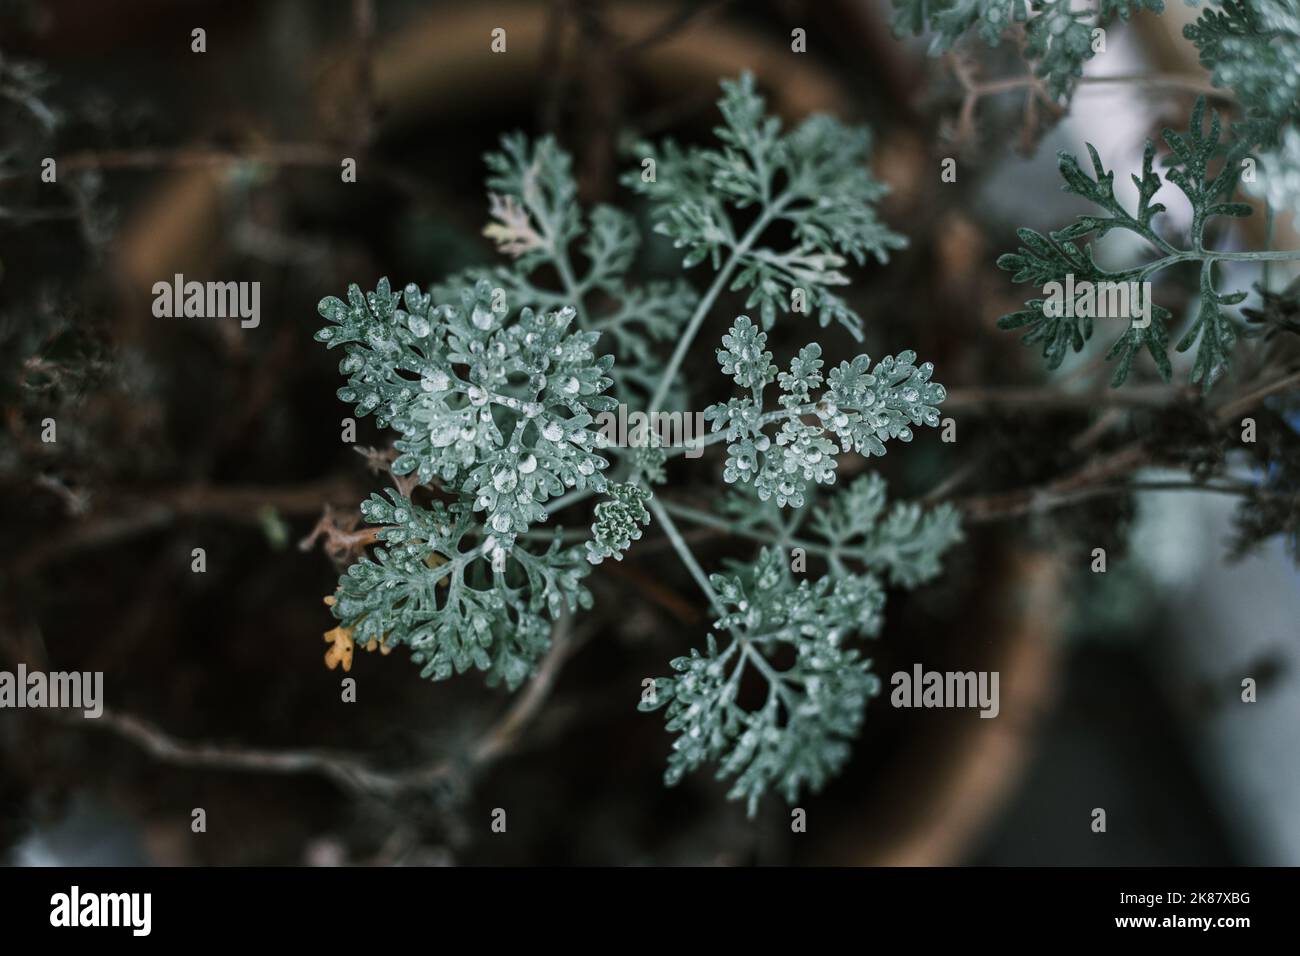 A closeup of Artemisia herba-alba leaves with dark blurred background Stock Photo